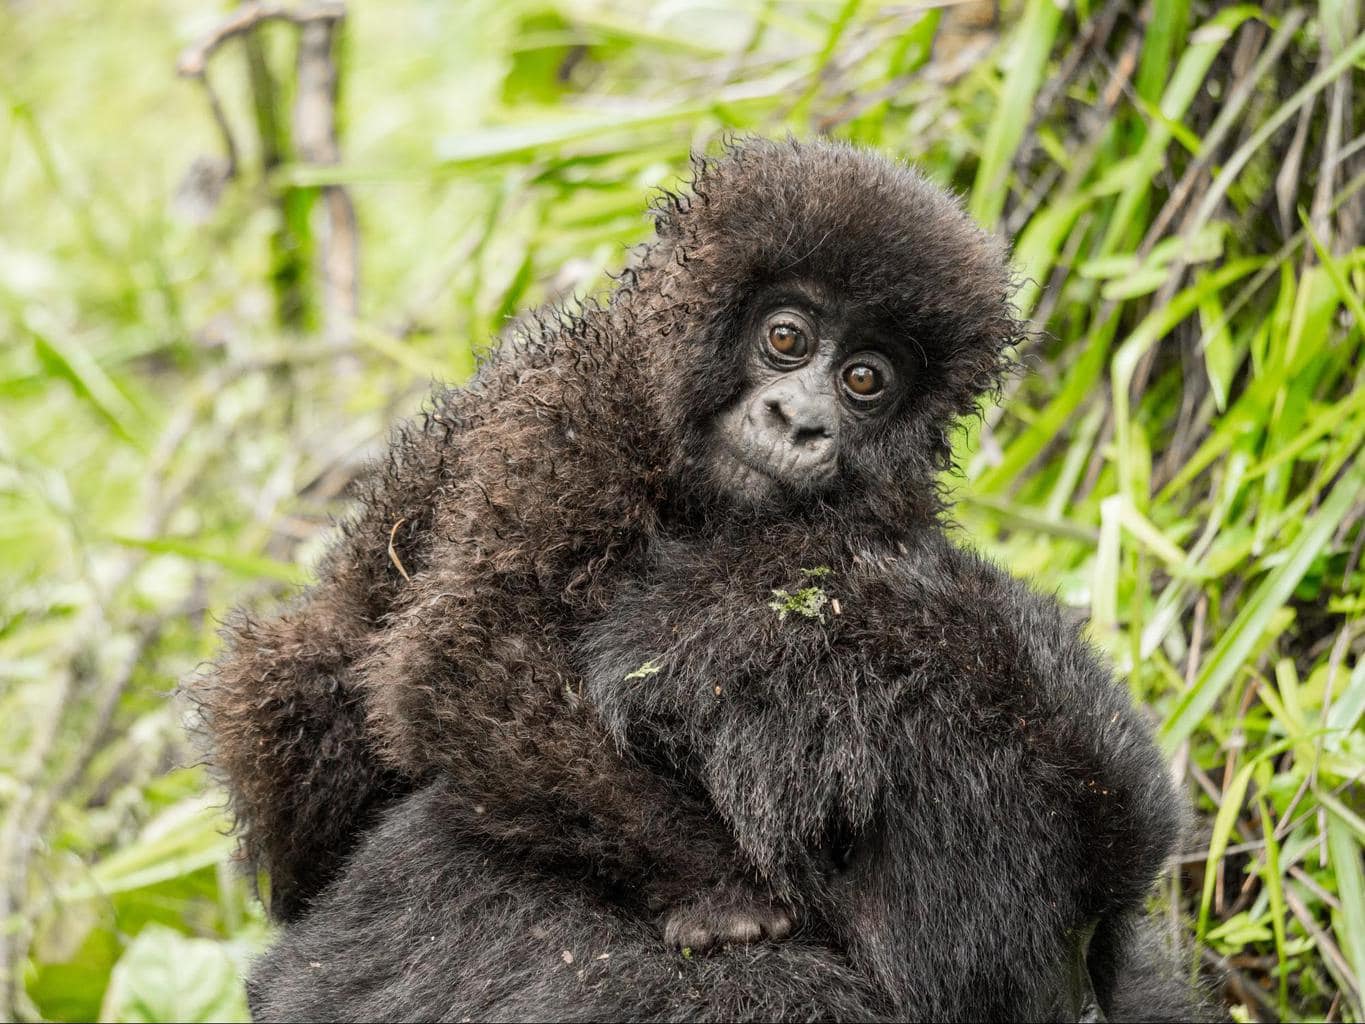 The ball of furry hair of a baby mountain gorilla